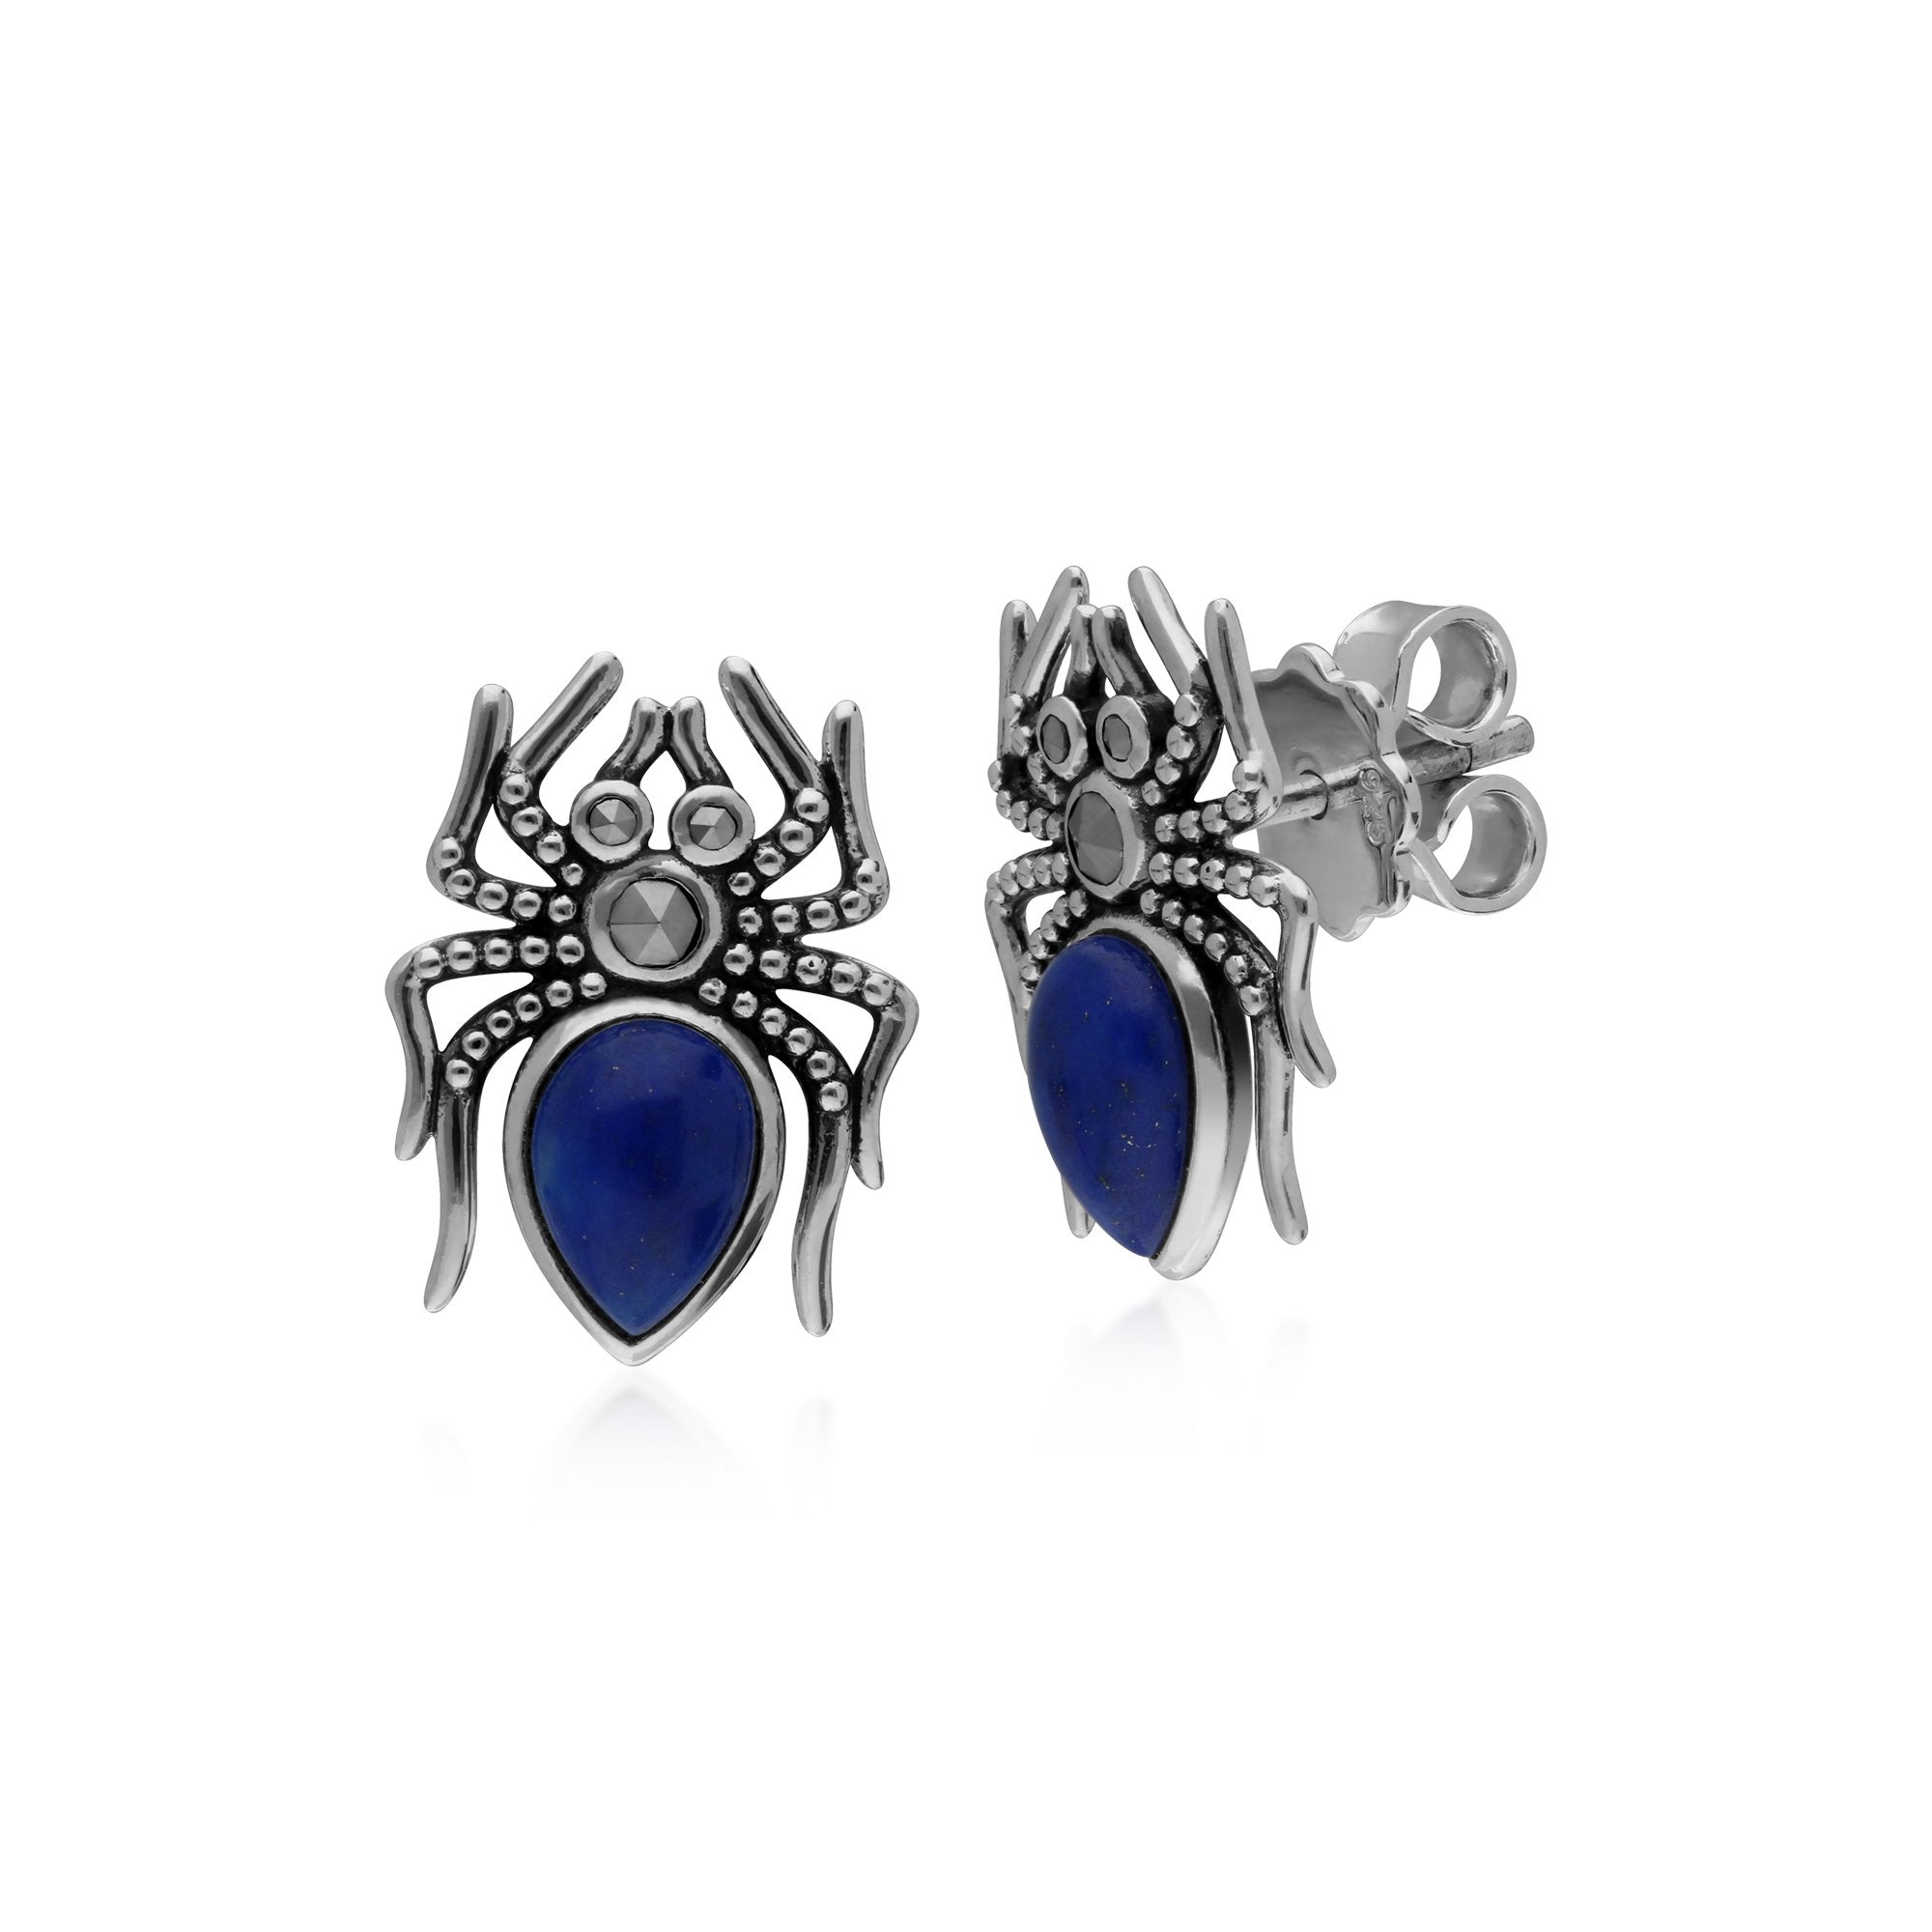 Gemondo Sterling Silver Lapis Lazuli & Marcasite Spider Stud Earrings